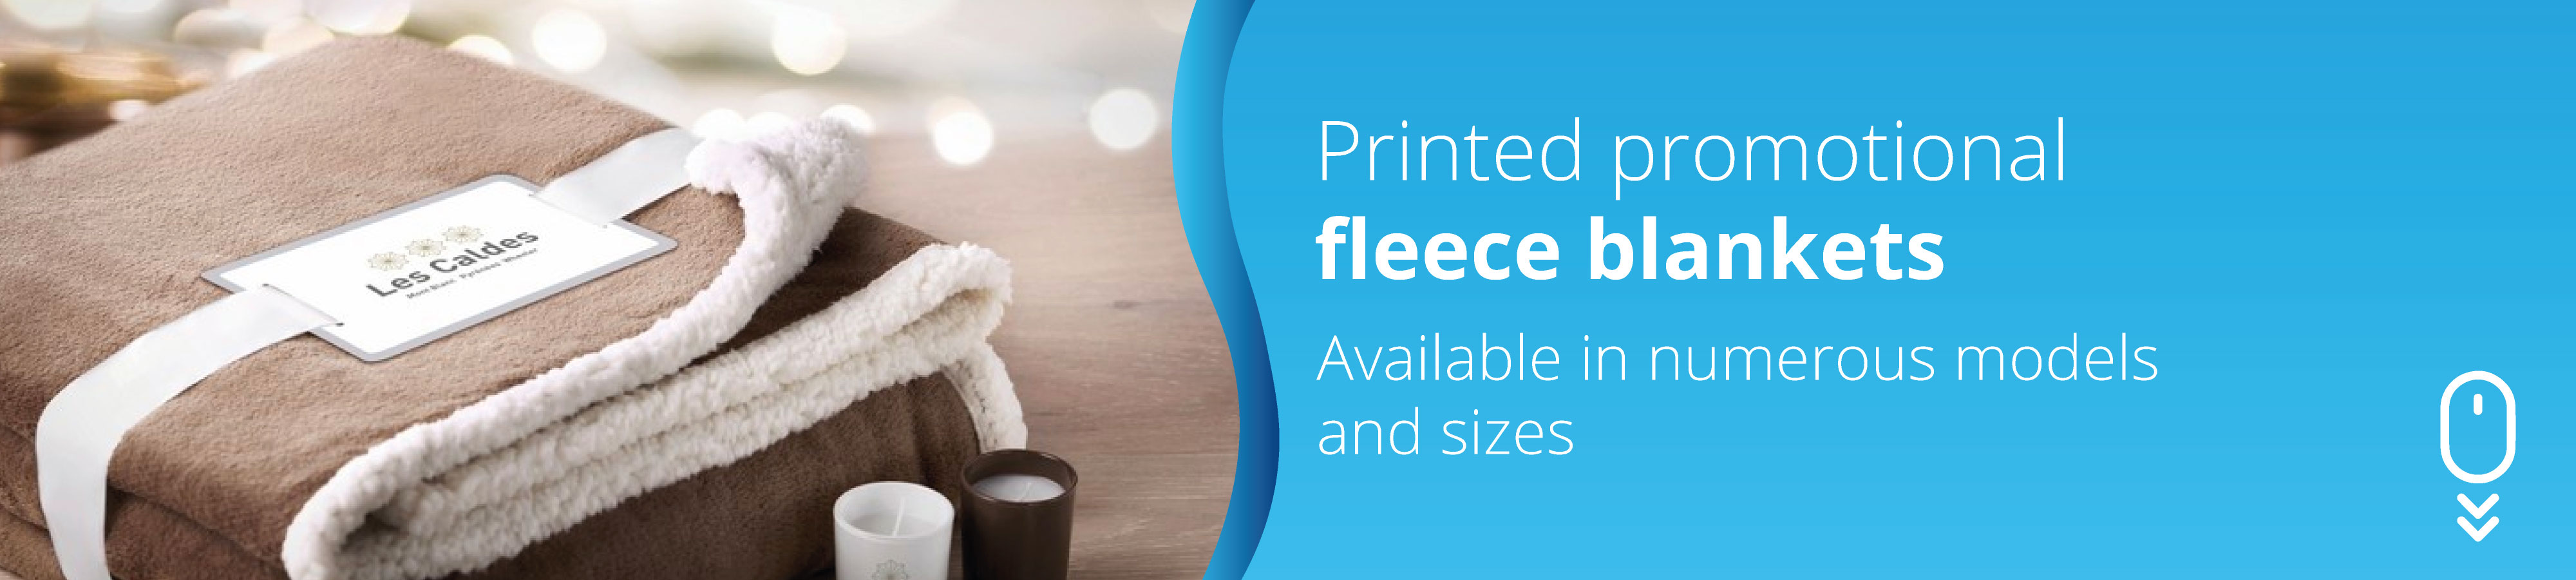 printed-promotional-fleece-blankets